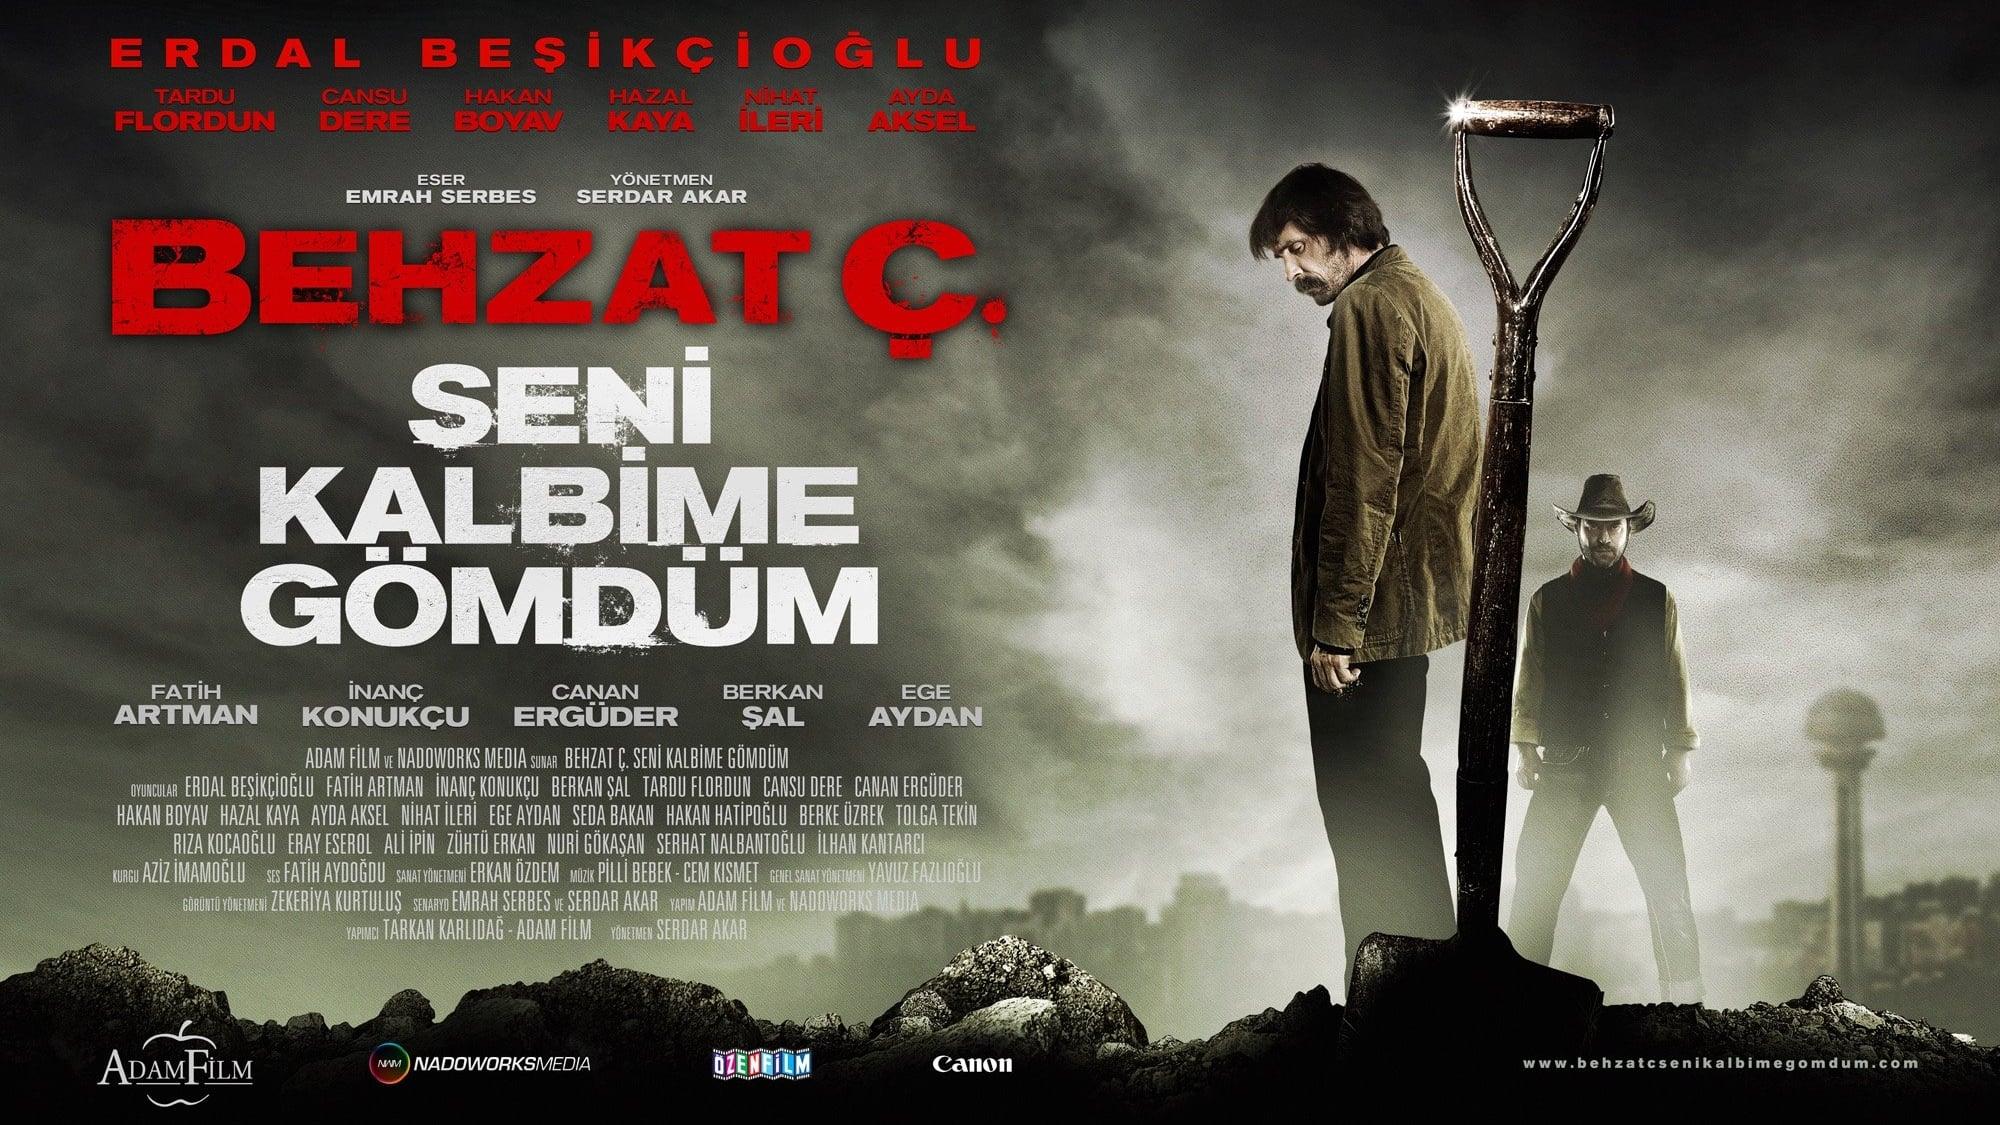 Behzat Ç.: I Buried You in My Heart backdrop